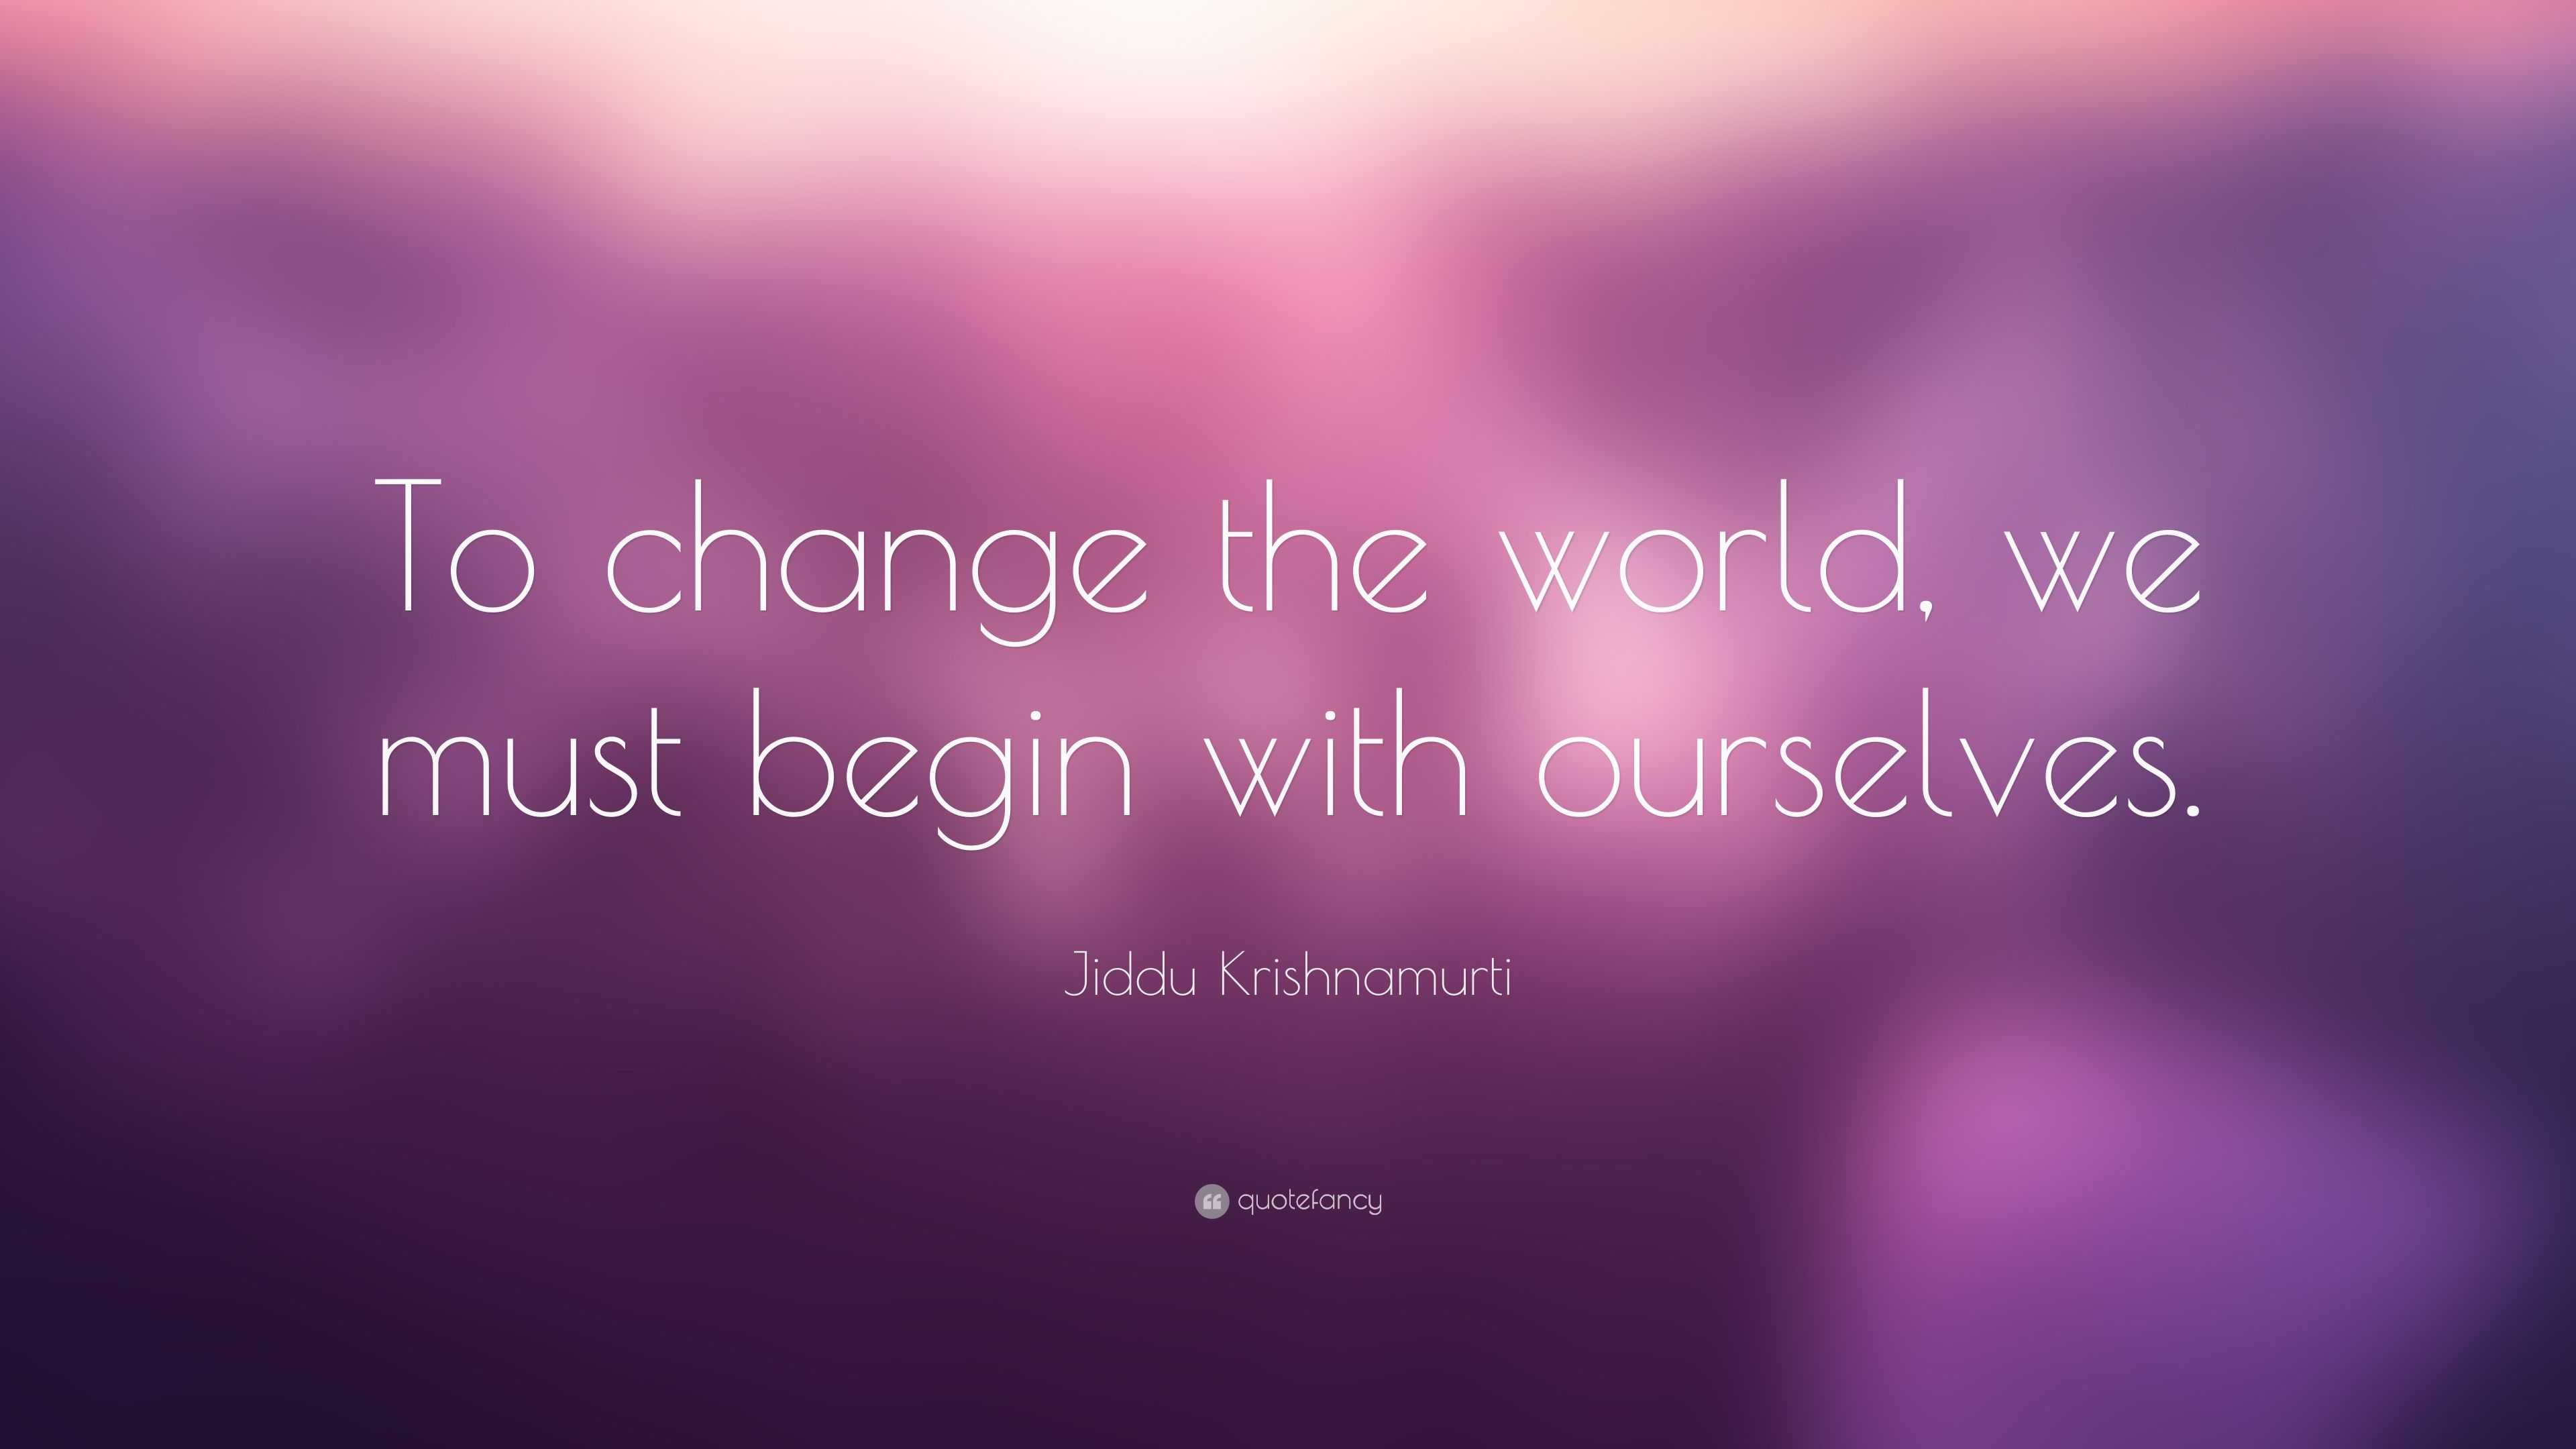 Jiddu Krishnamurti Quote: “To change the world, we must begin with ...